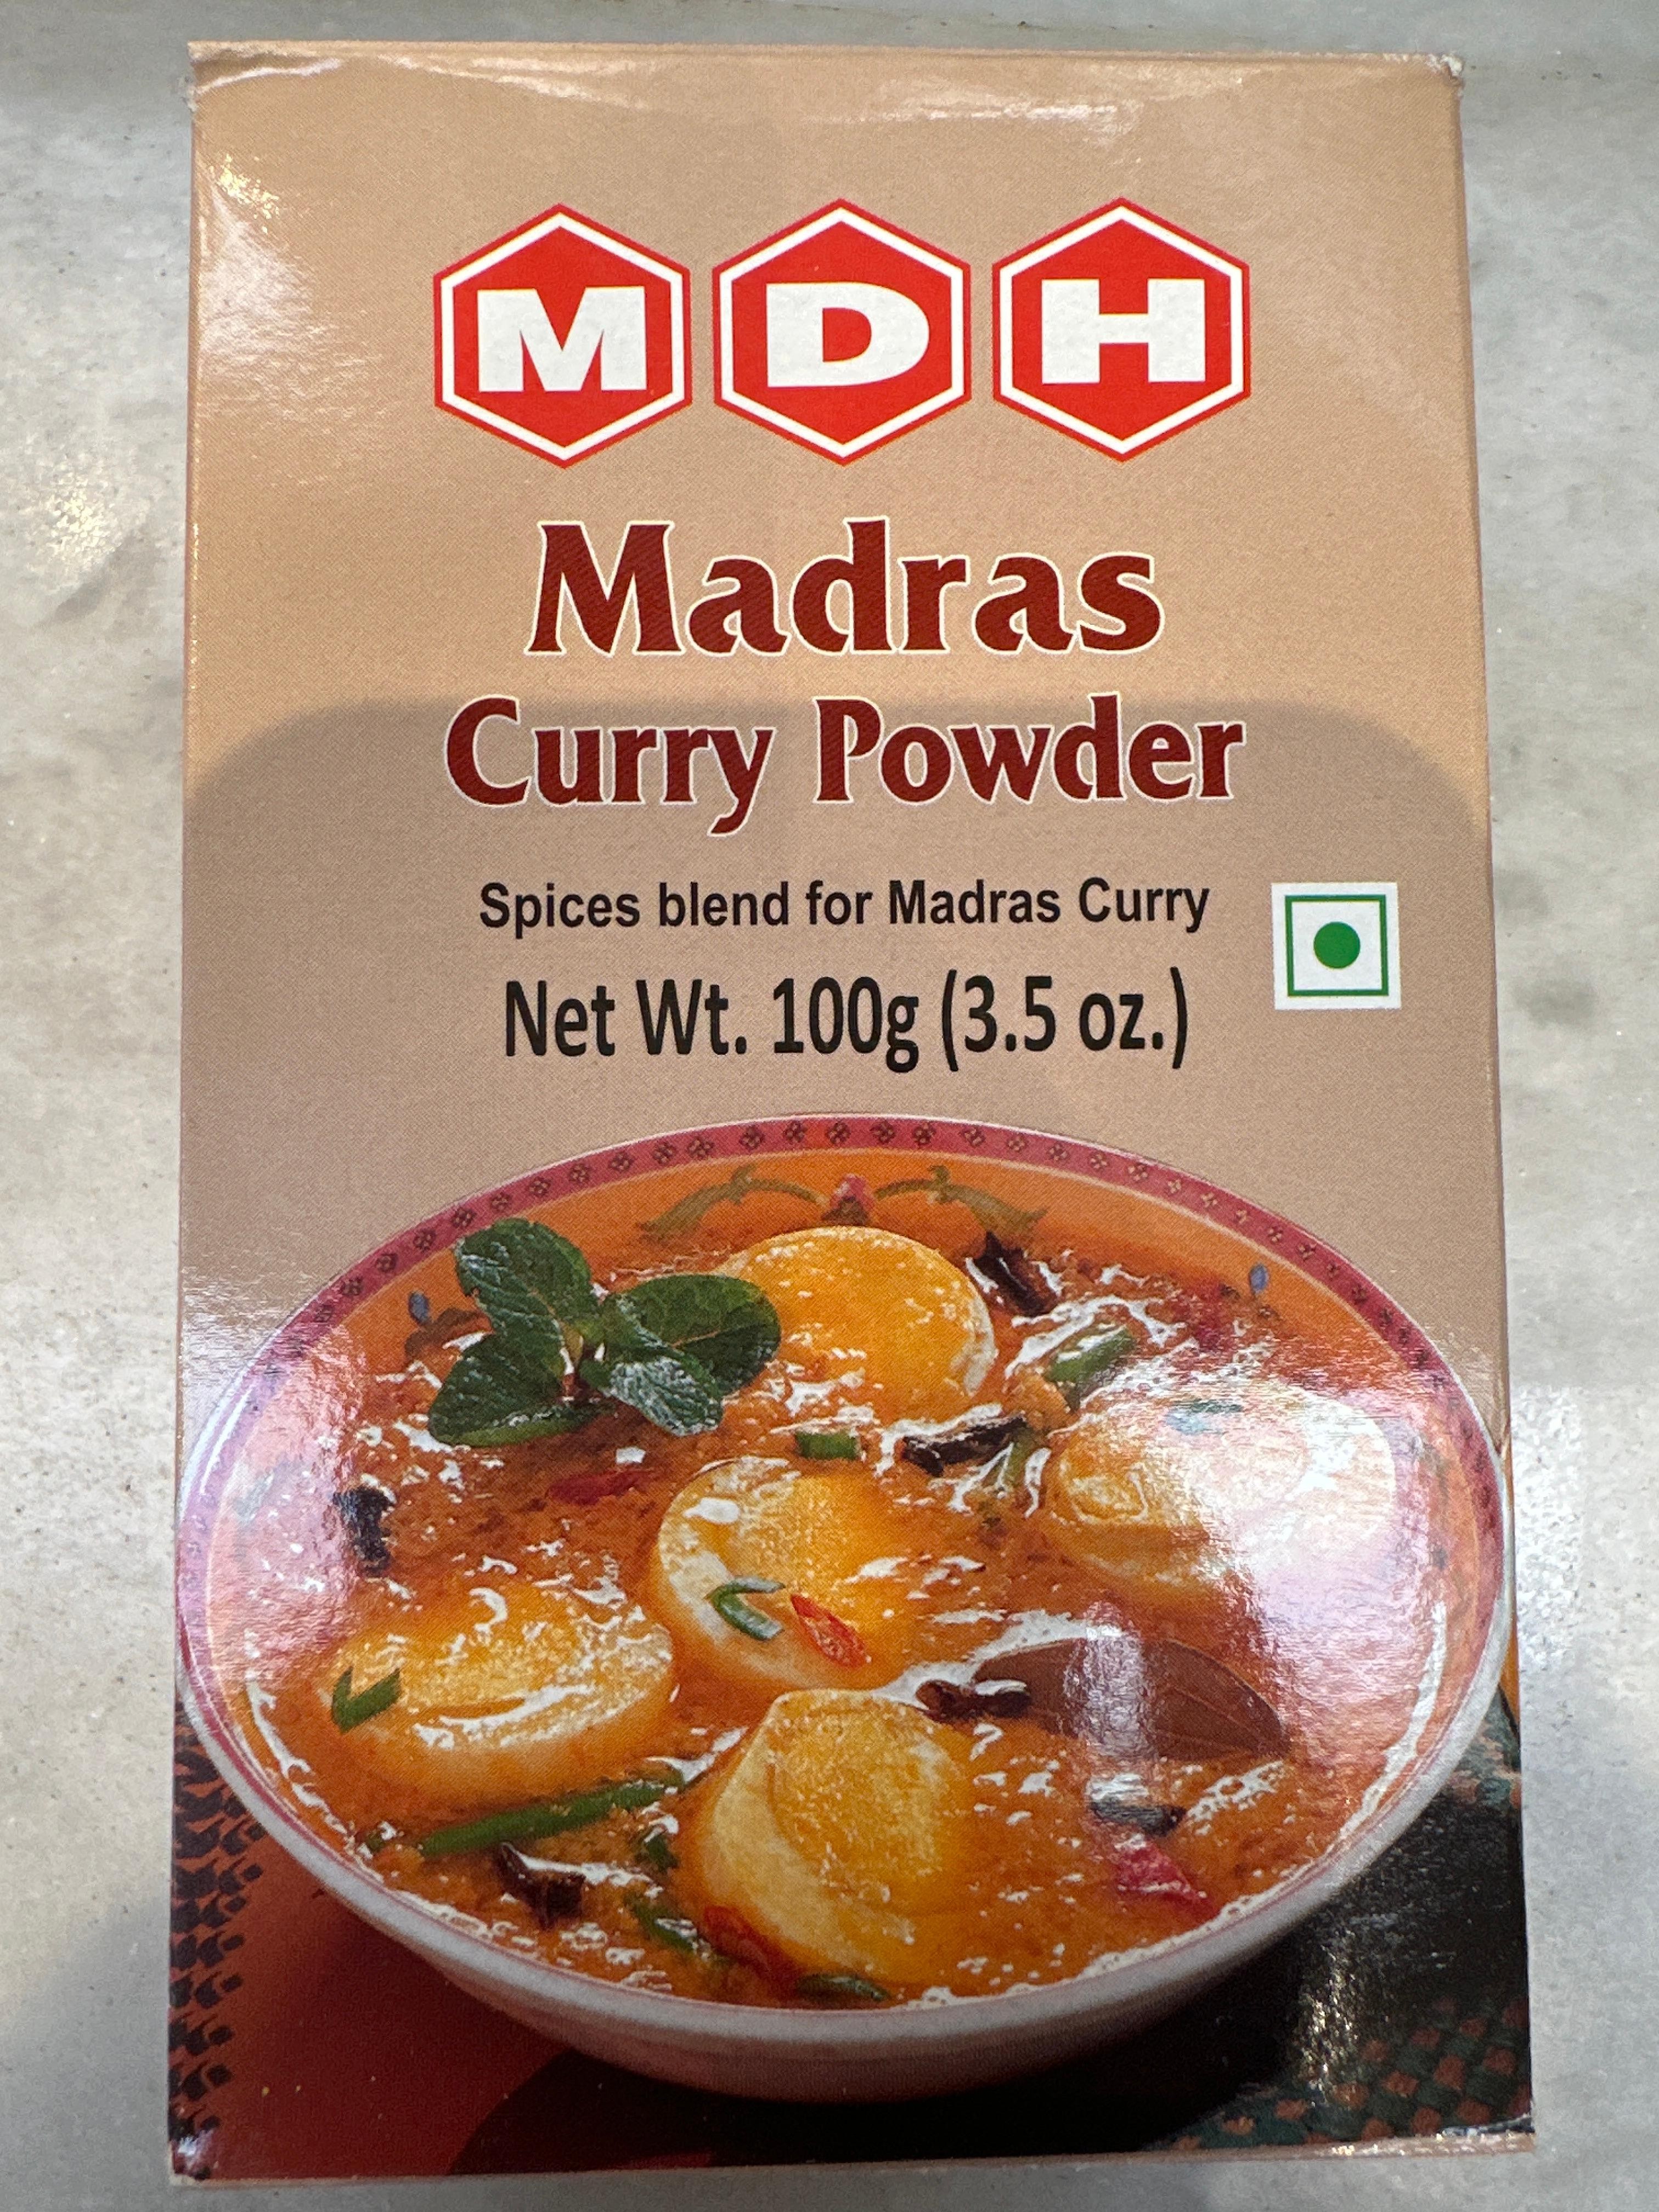 Mdh madras curry pwd 100g